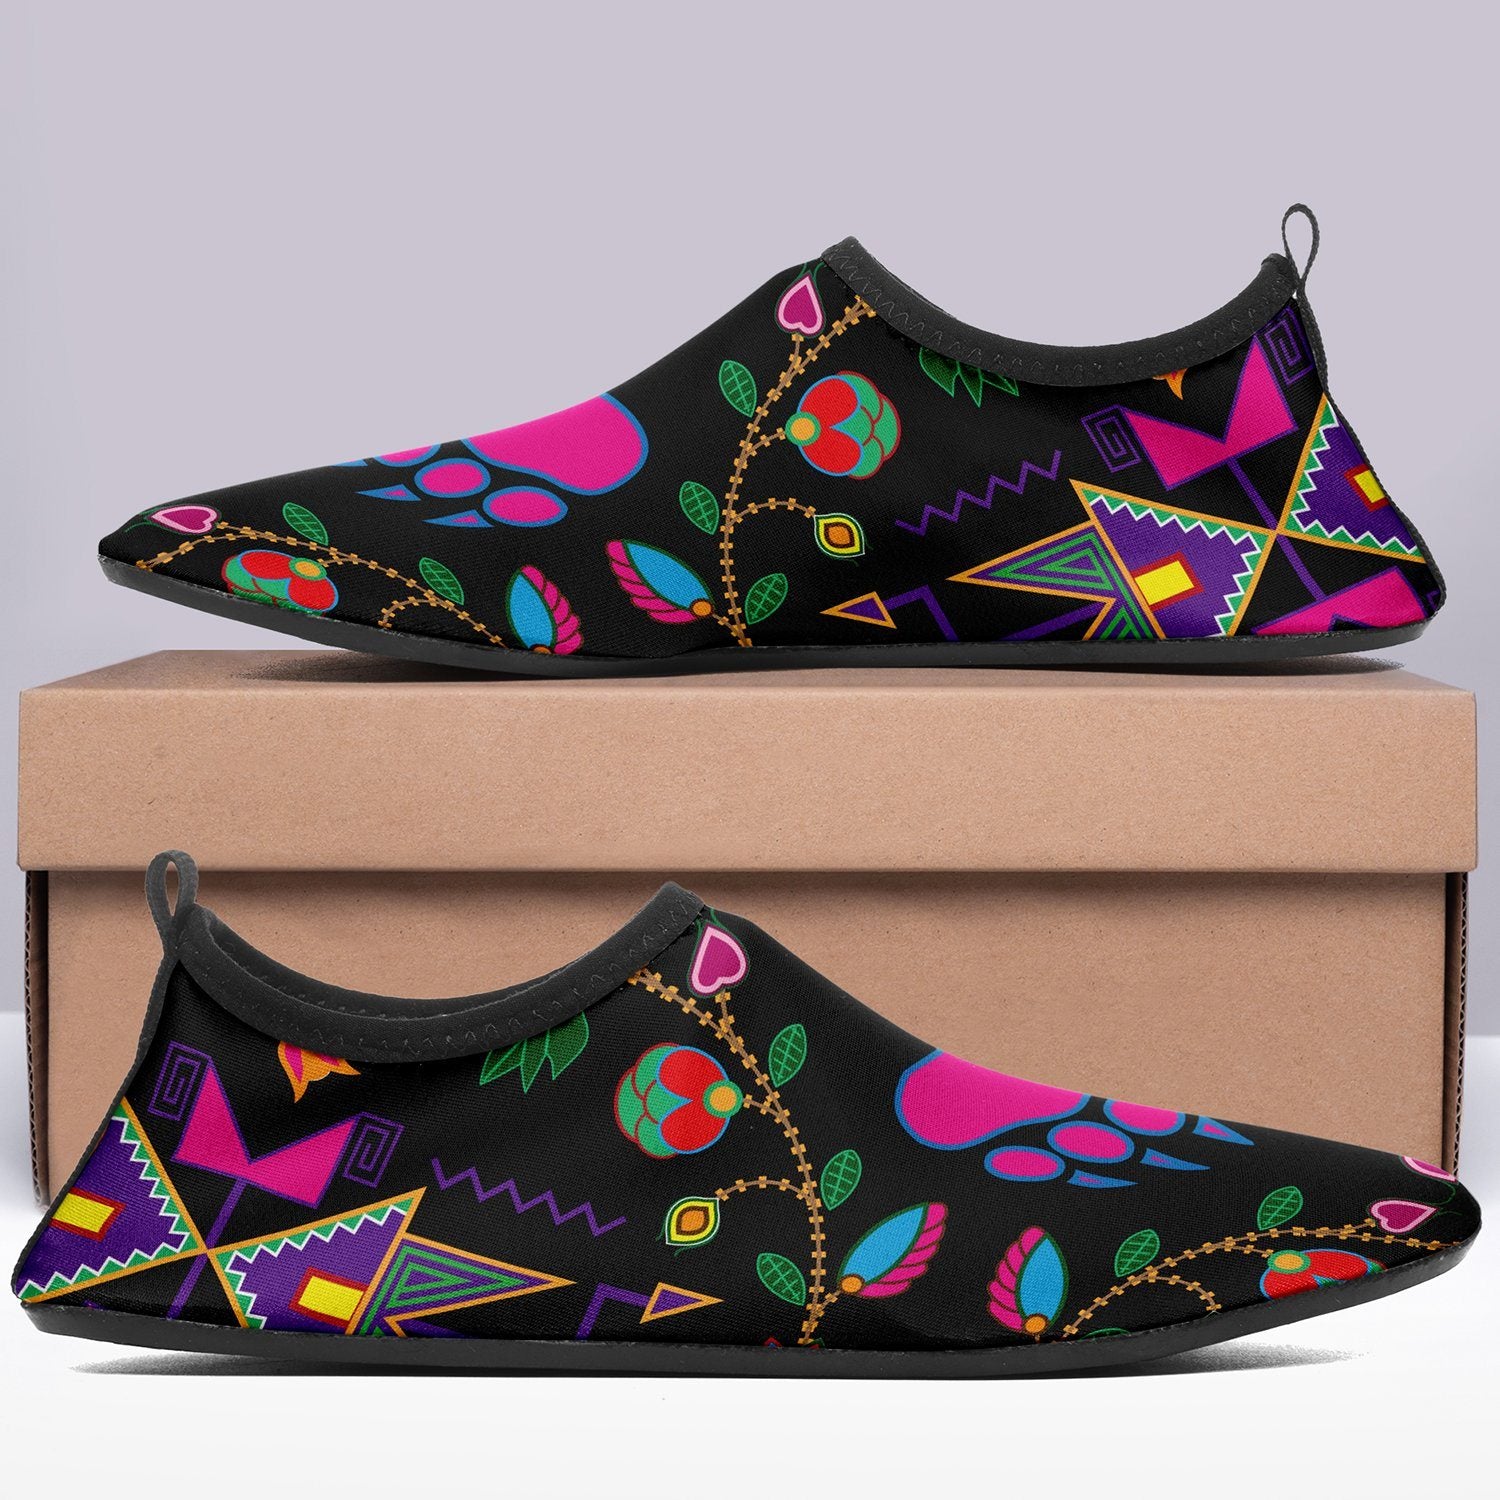 Geometric Floral Fall Black Sockamoccs Slip On Shoes 49 Dzine 